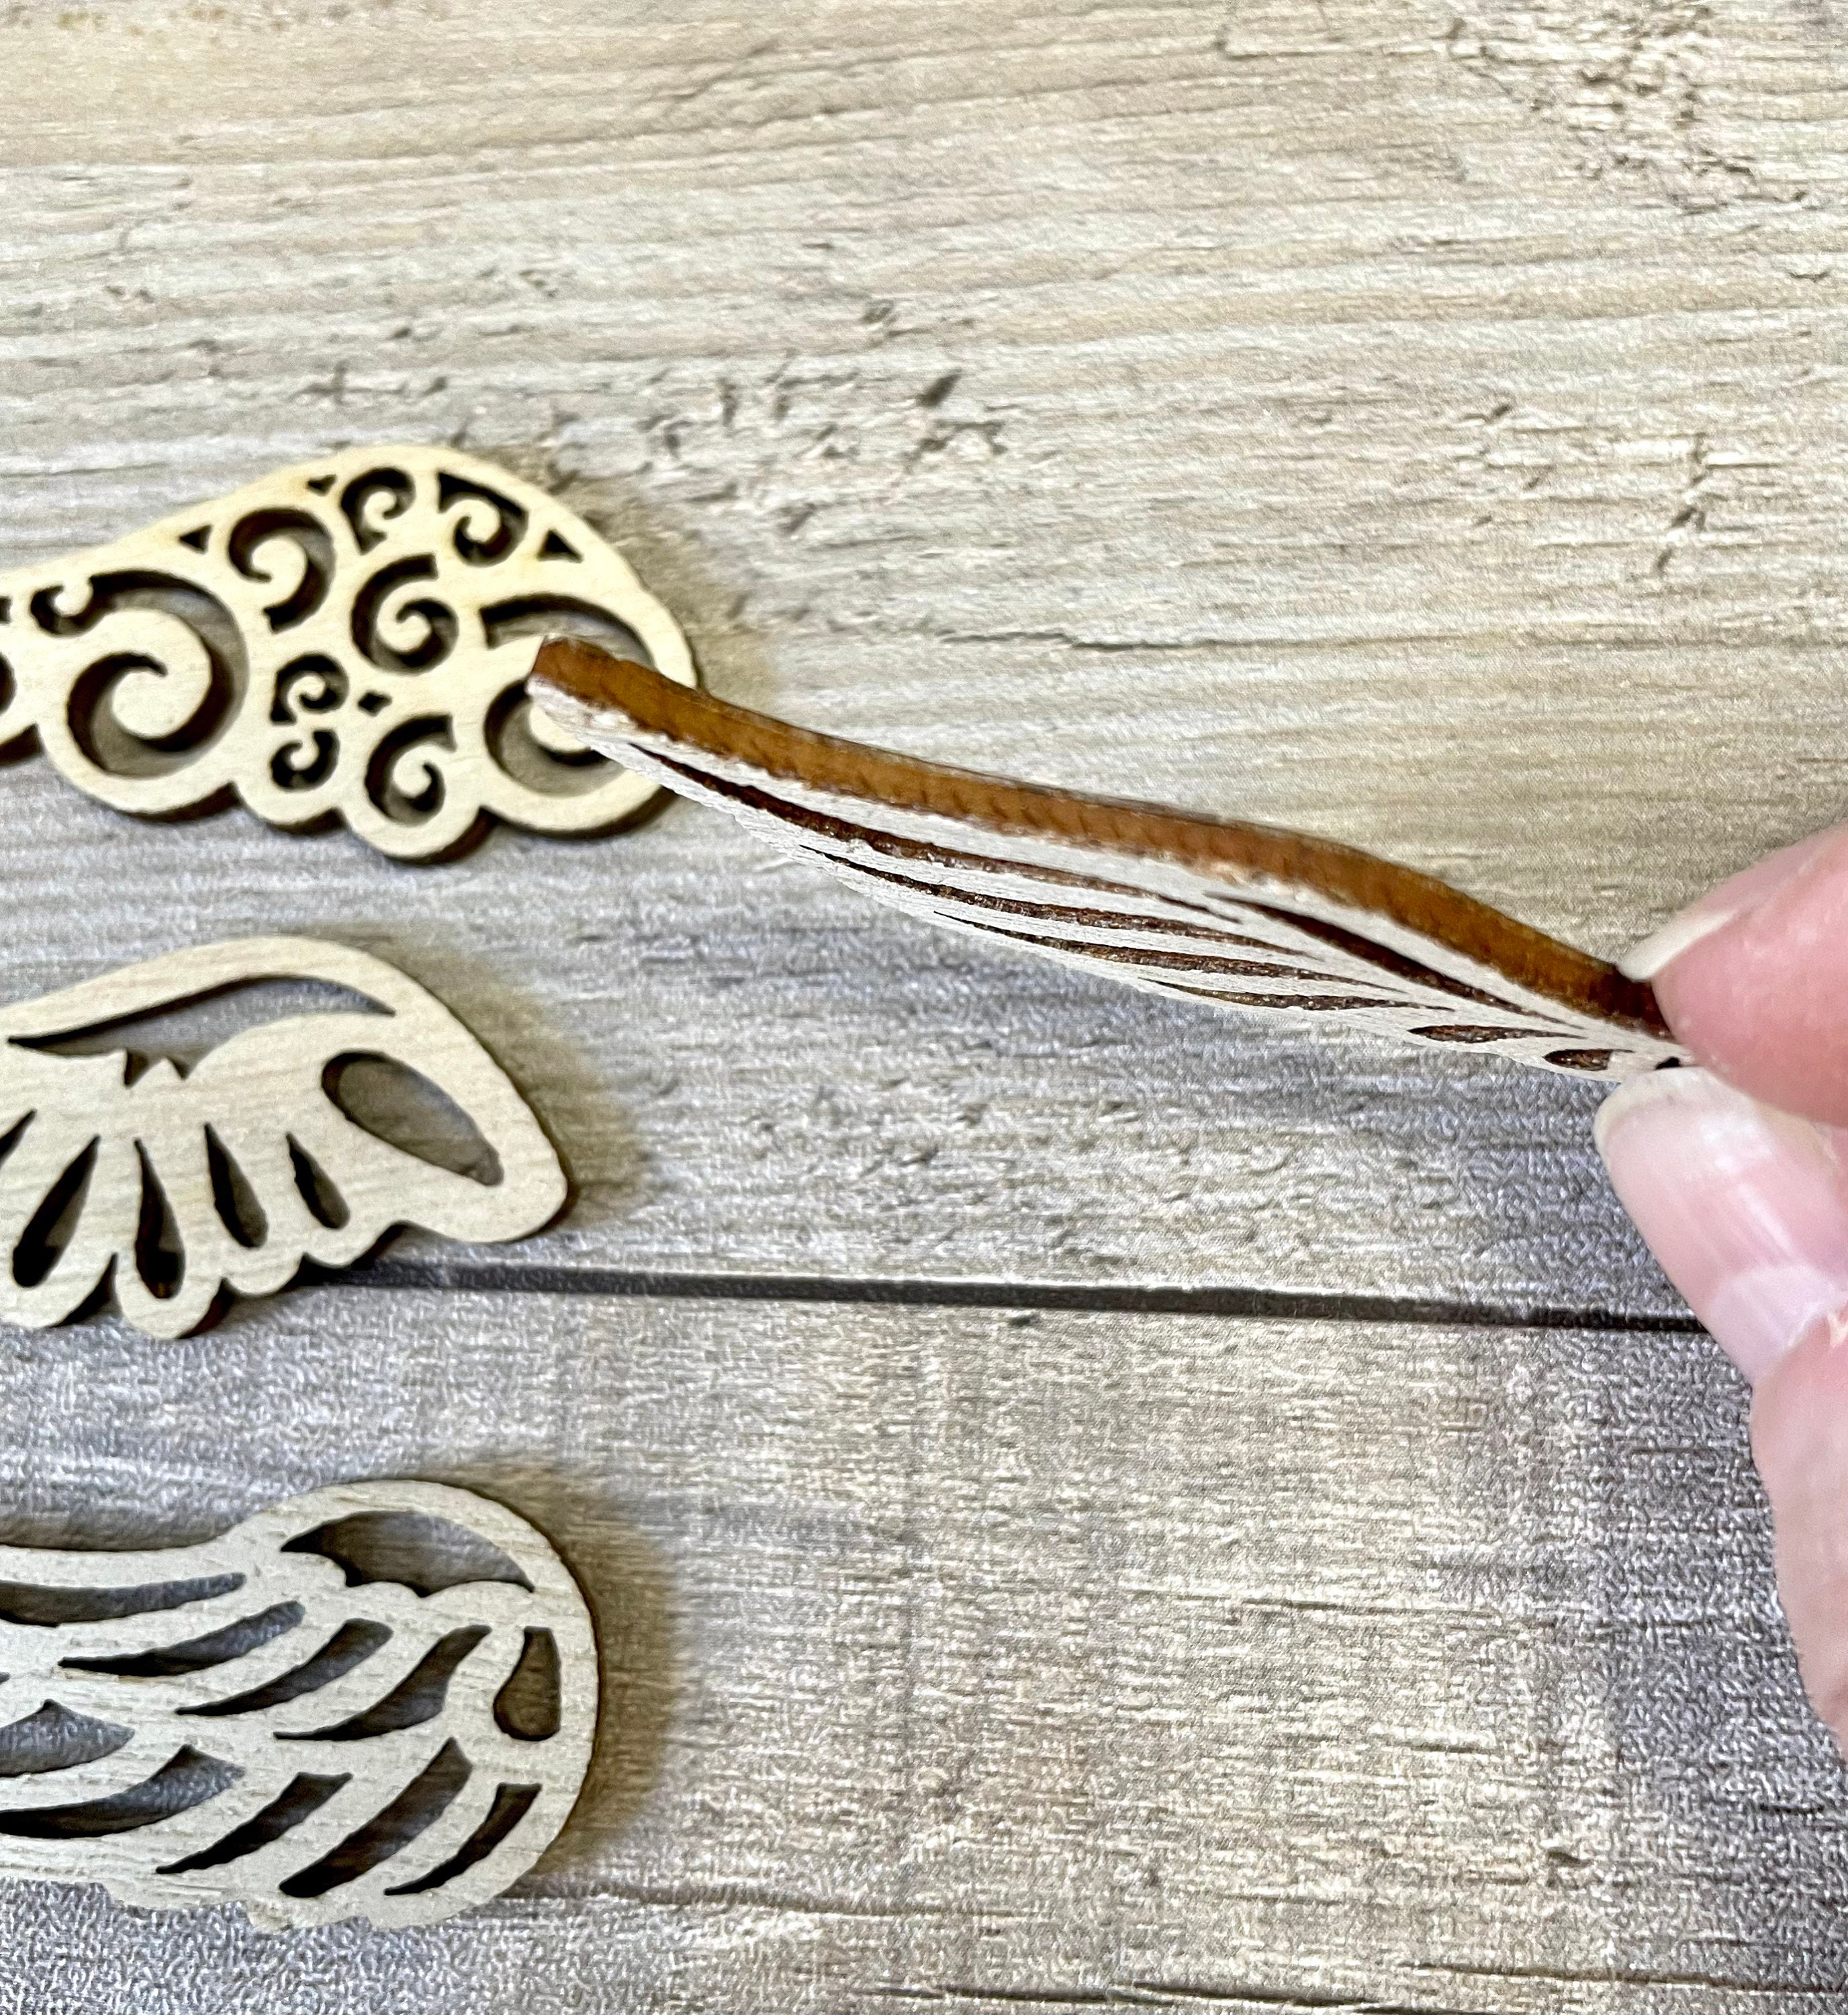 Wooden Angel Wings Crafts, Crafts Wood Scrapbook Angel